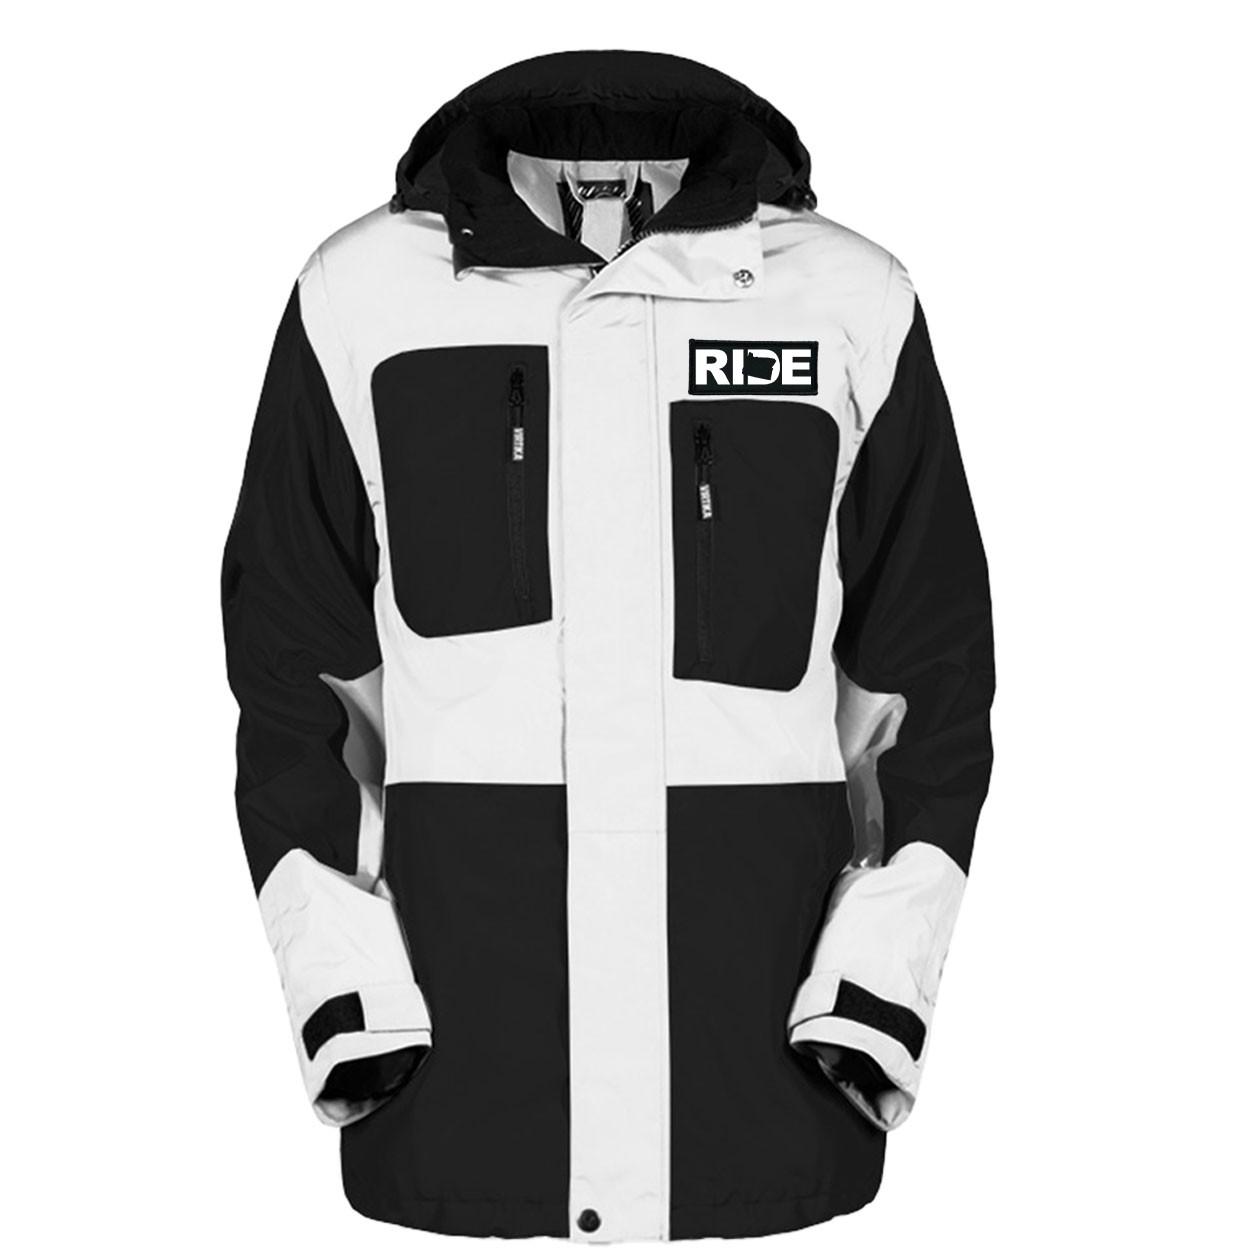 Ride Oregon Classic Woven Patch Pro Snowboard Jacket (Black/White)